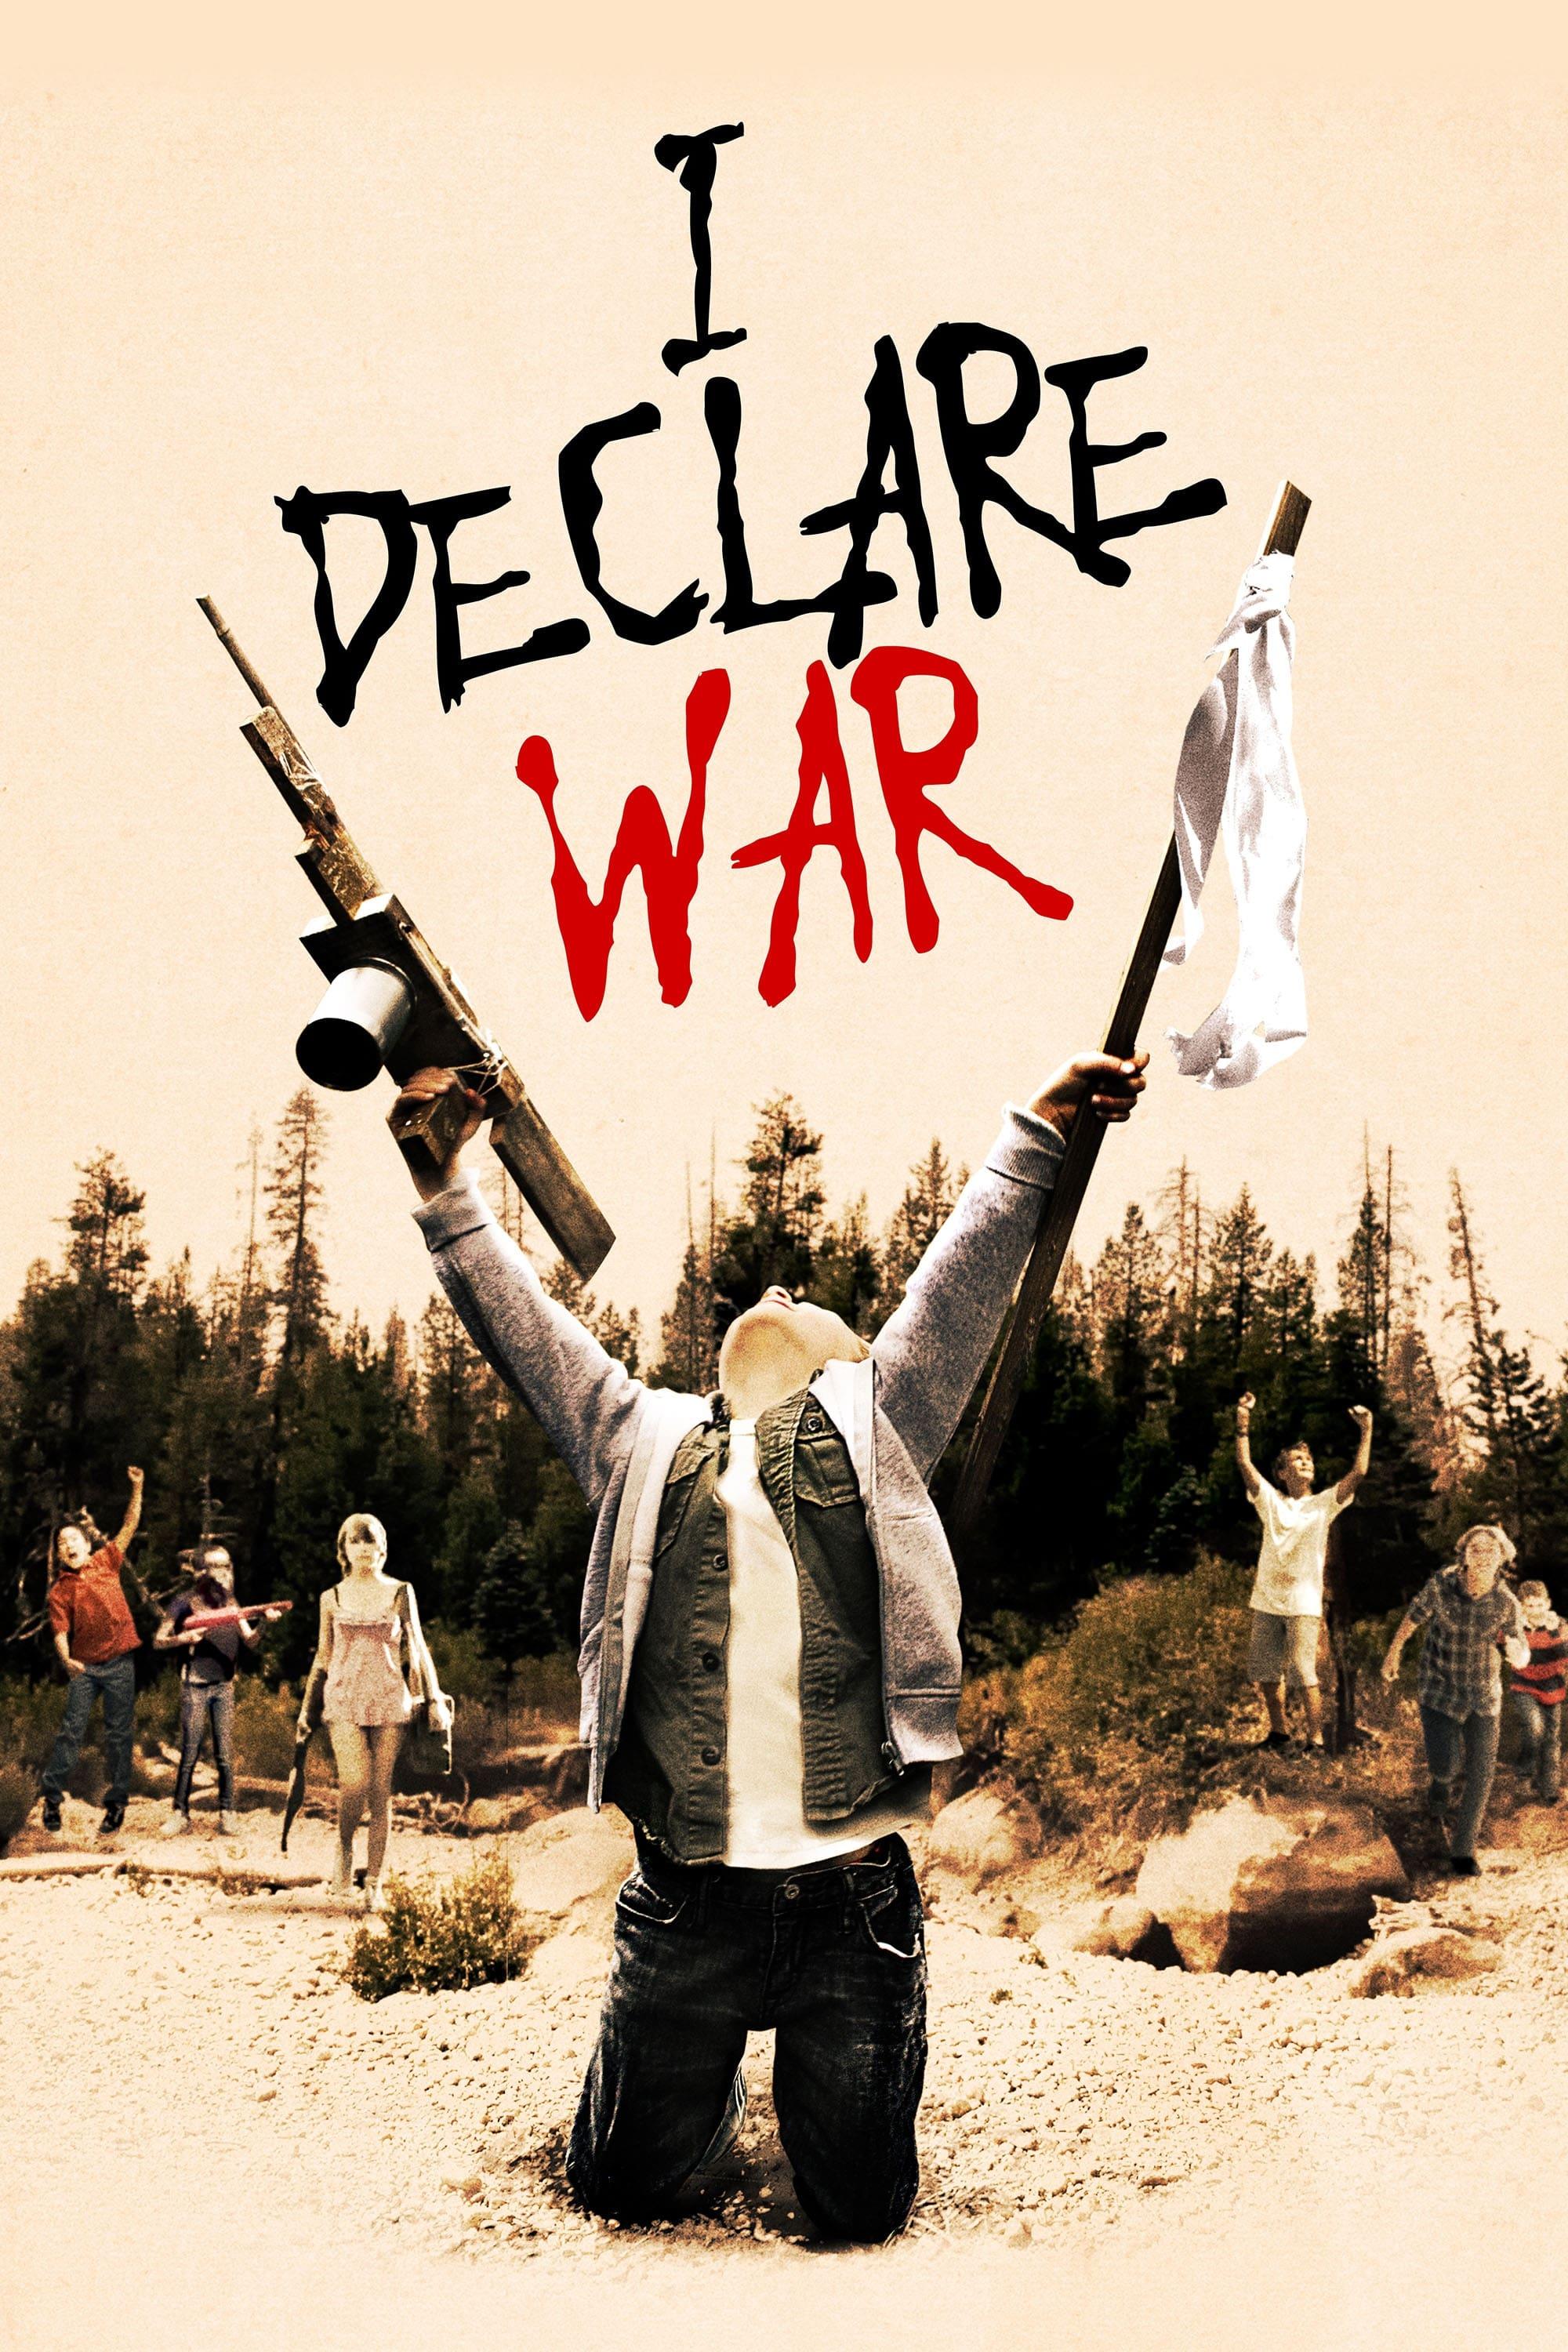 I Declare War poster